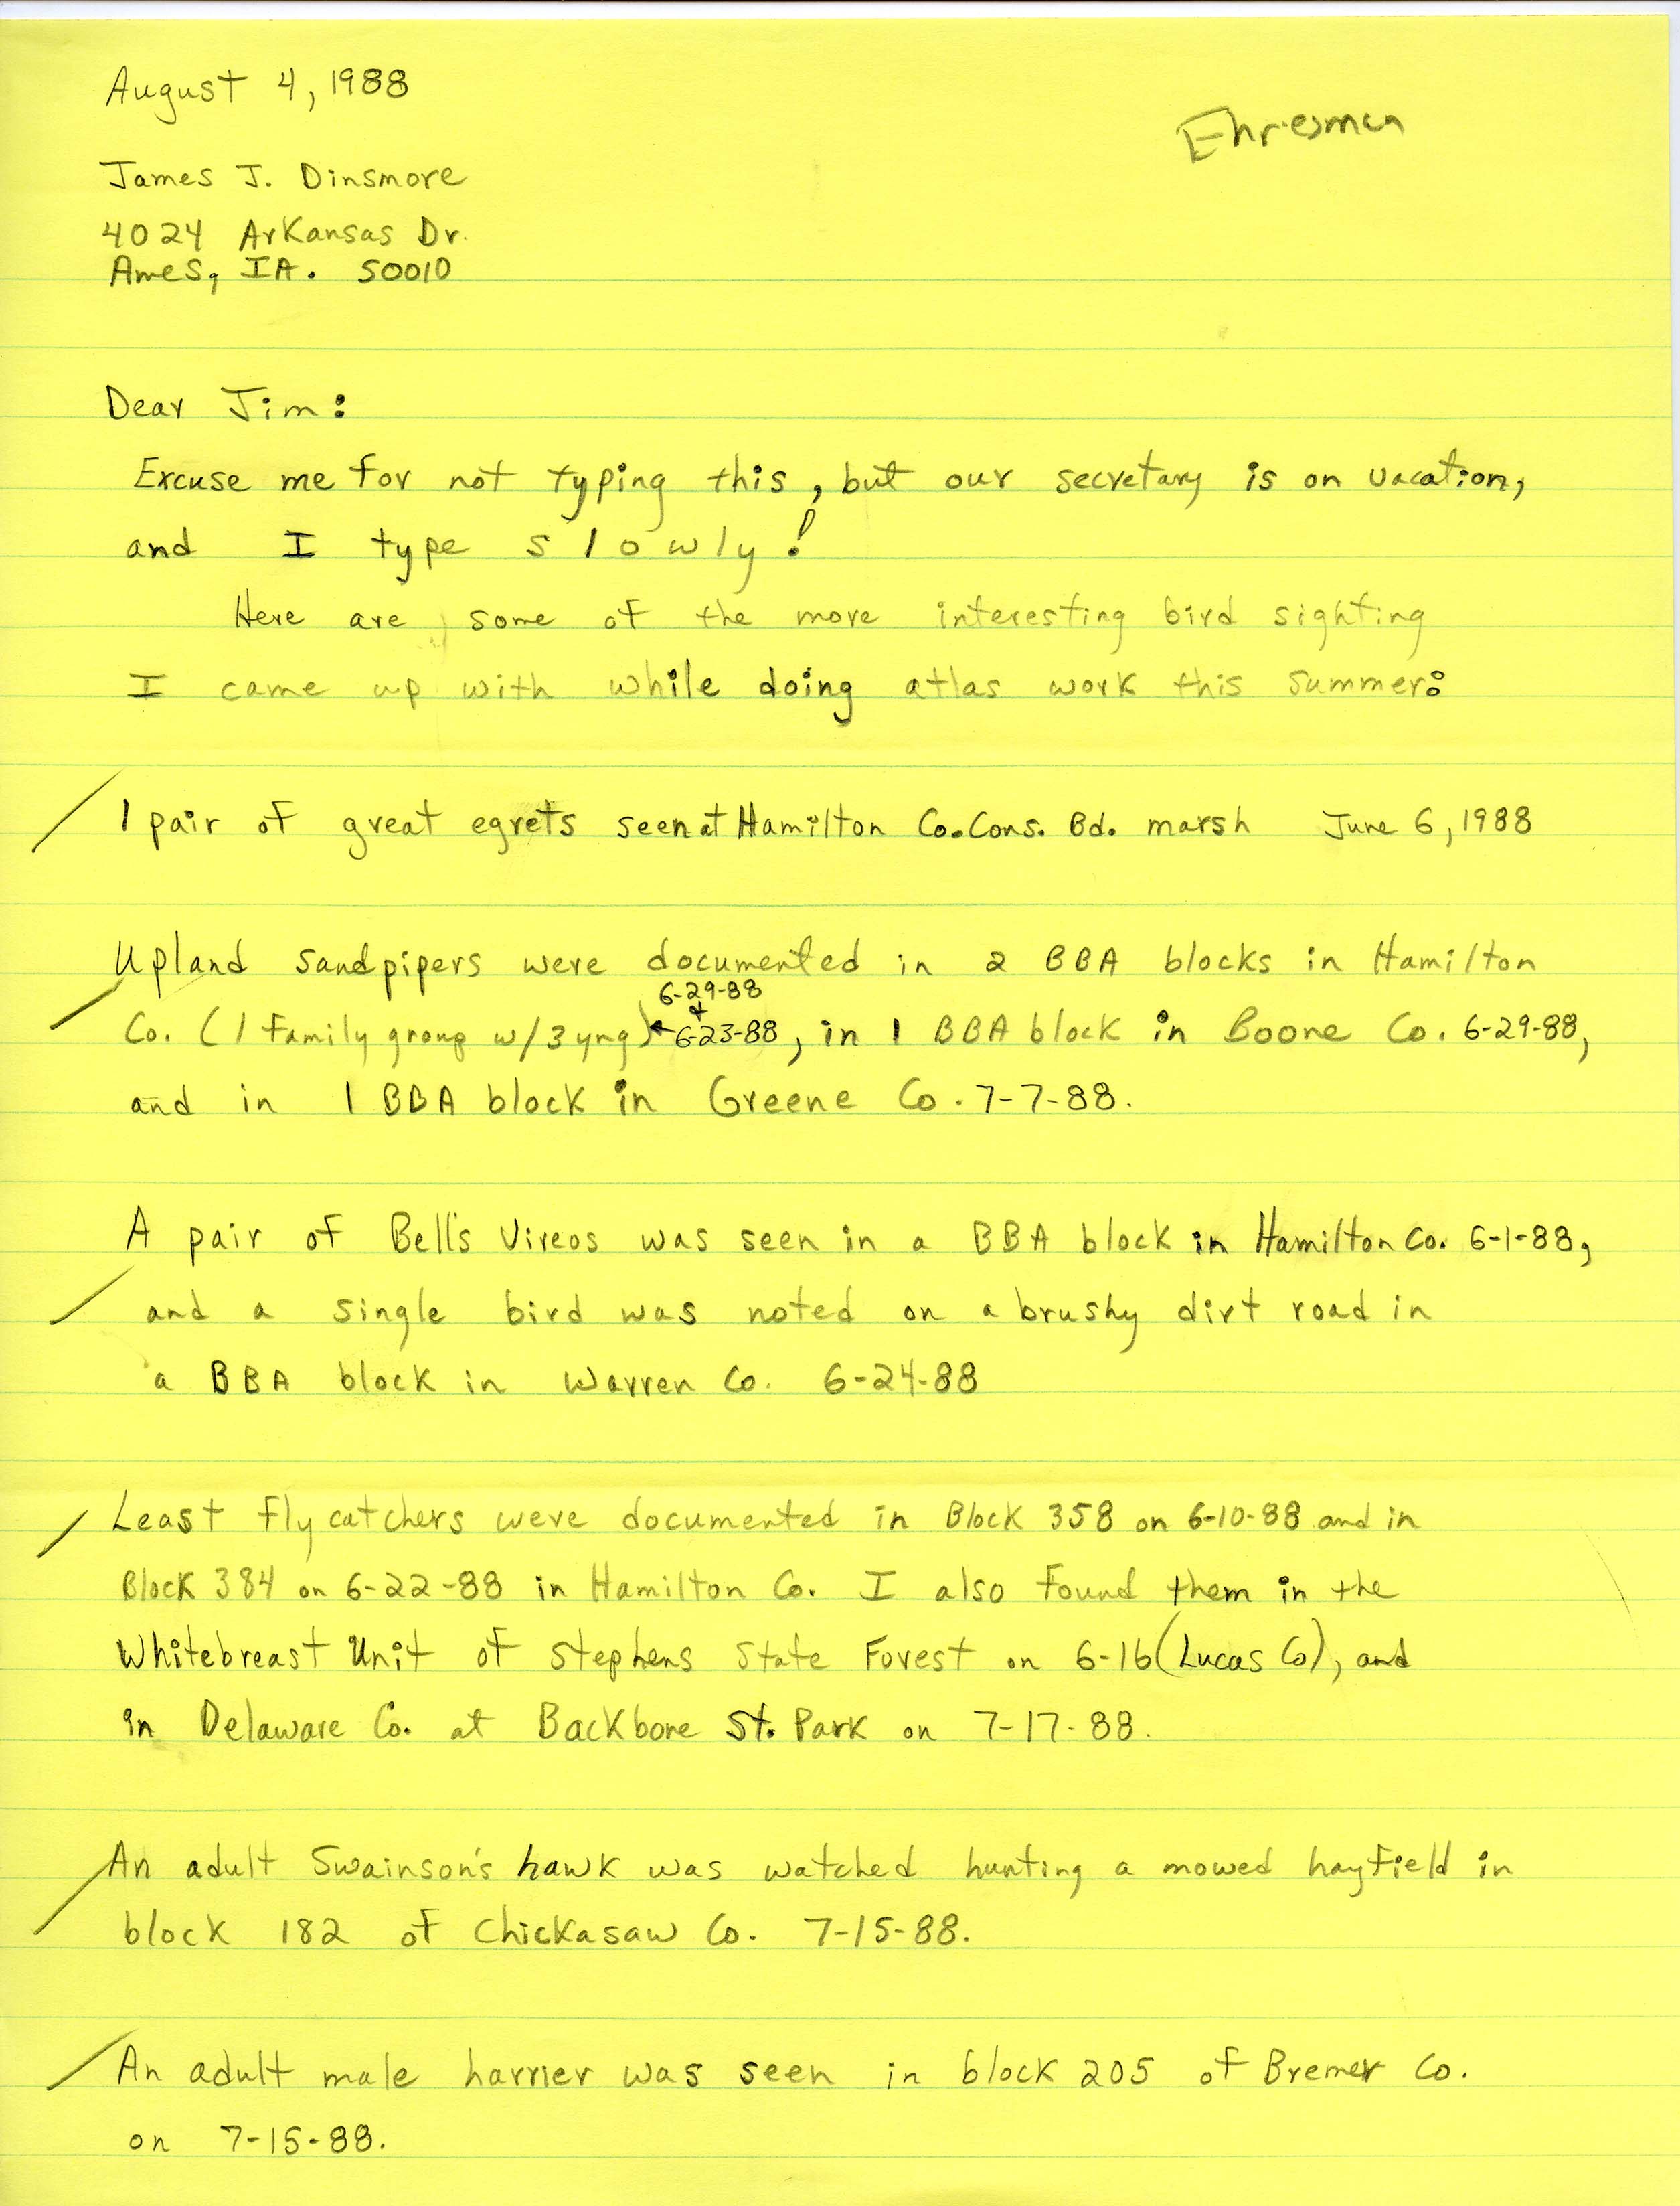 Bruce Ehresman letter to James J. Dinsmore regarding bird sightings, August 4, 1988